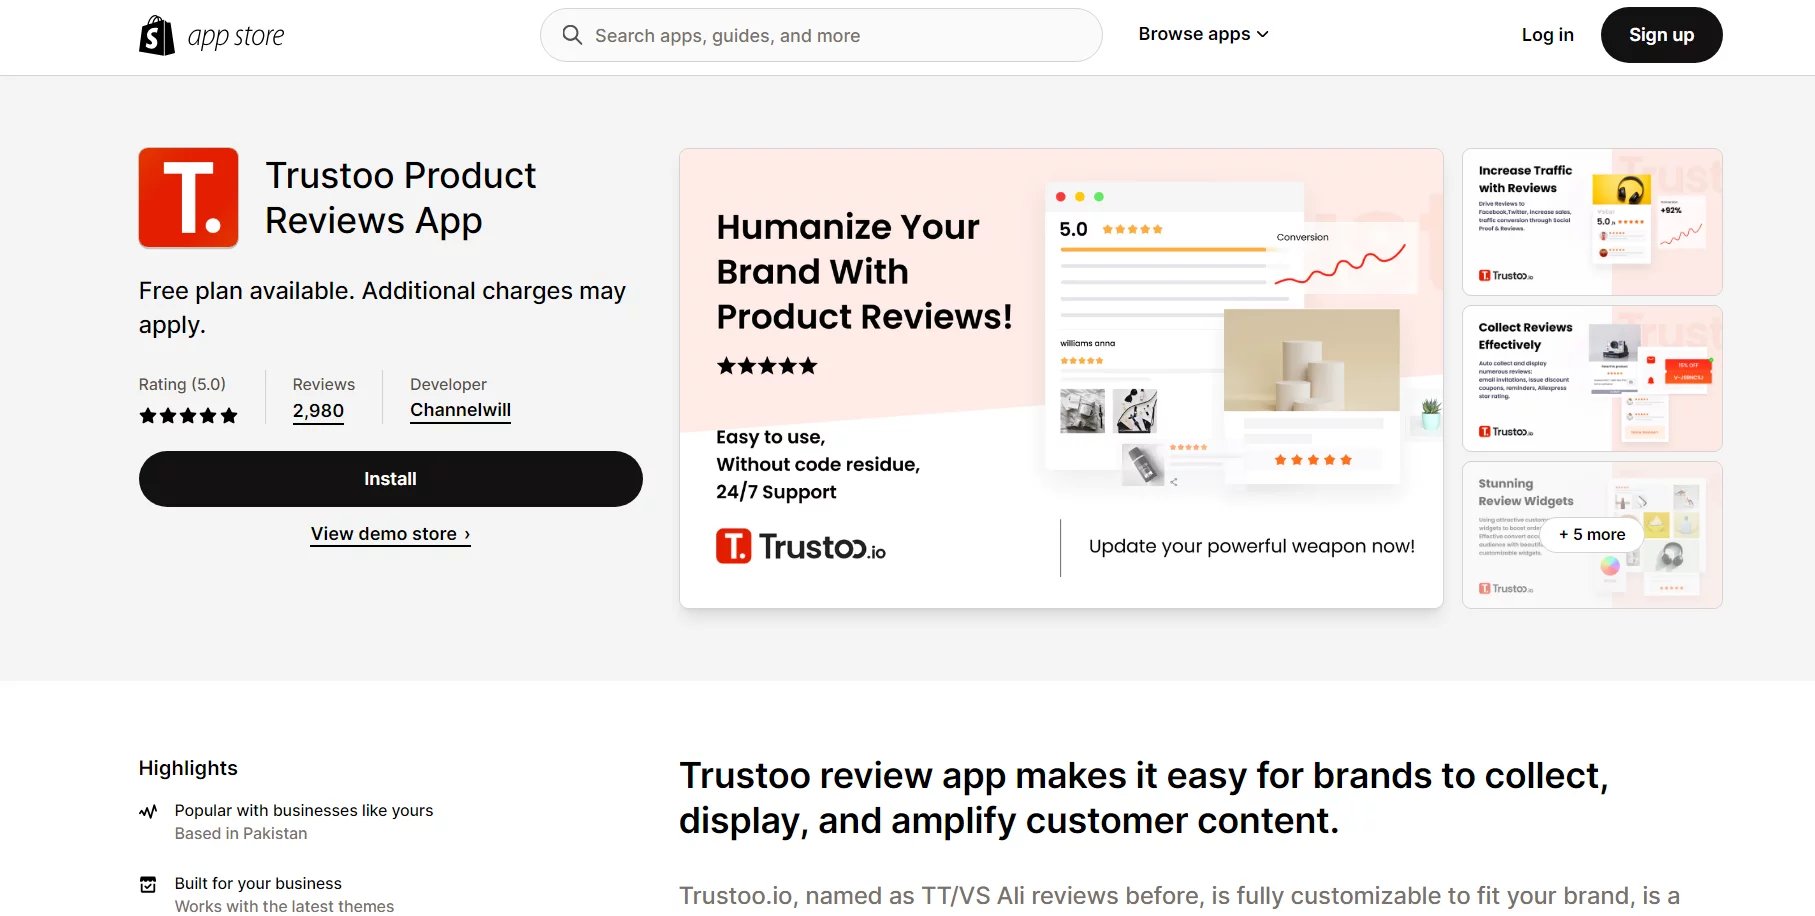 Best Shopify Rewards Apps- Trustoo Product Reviews App